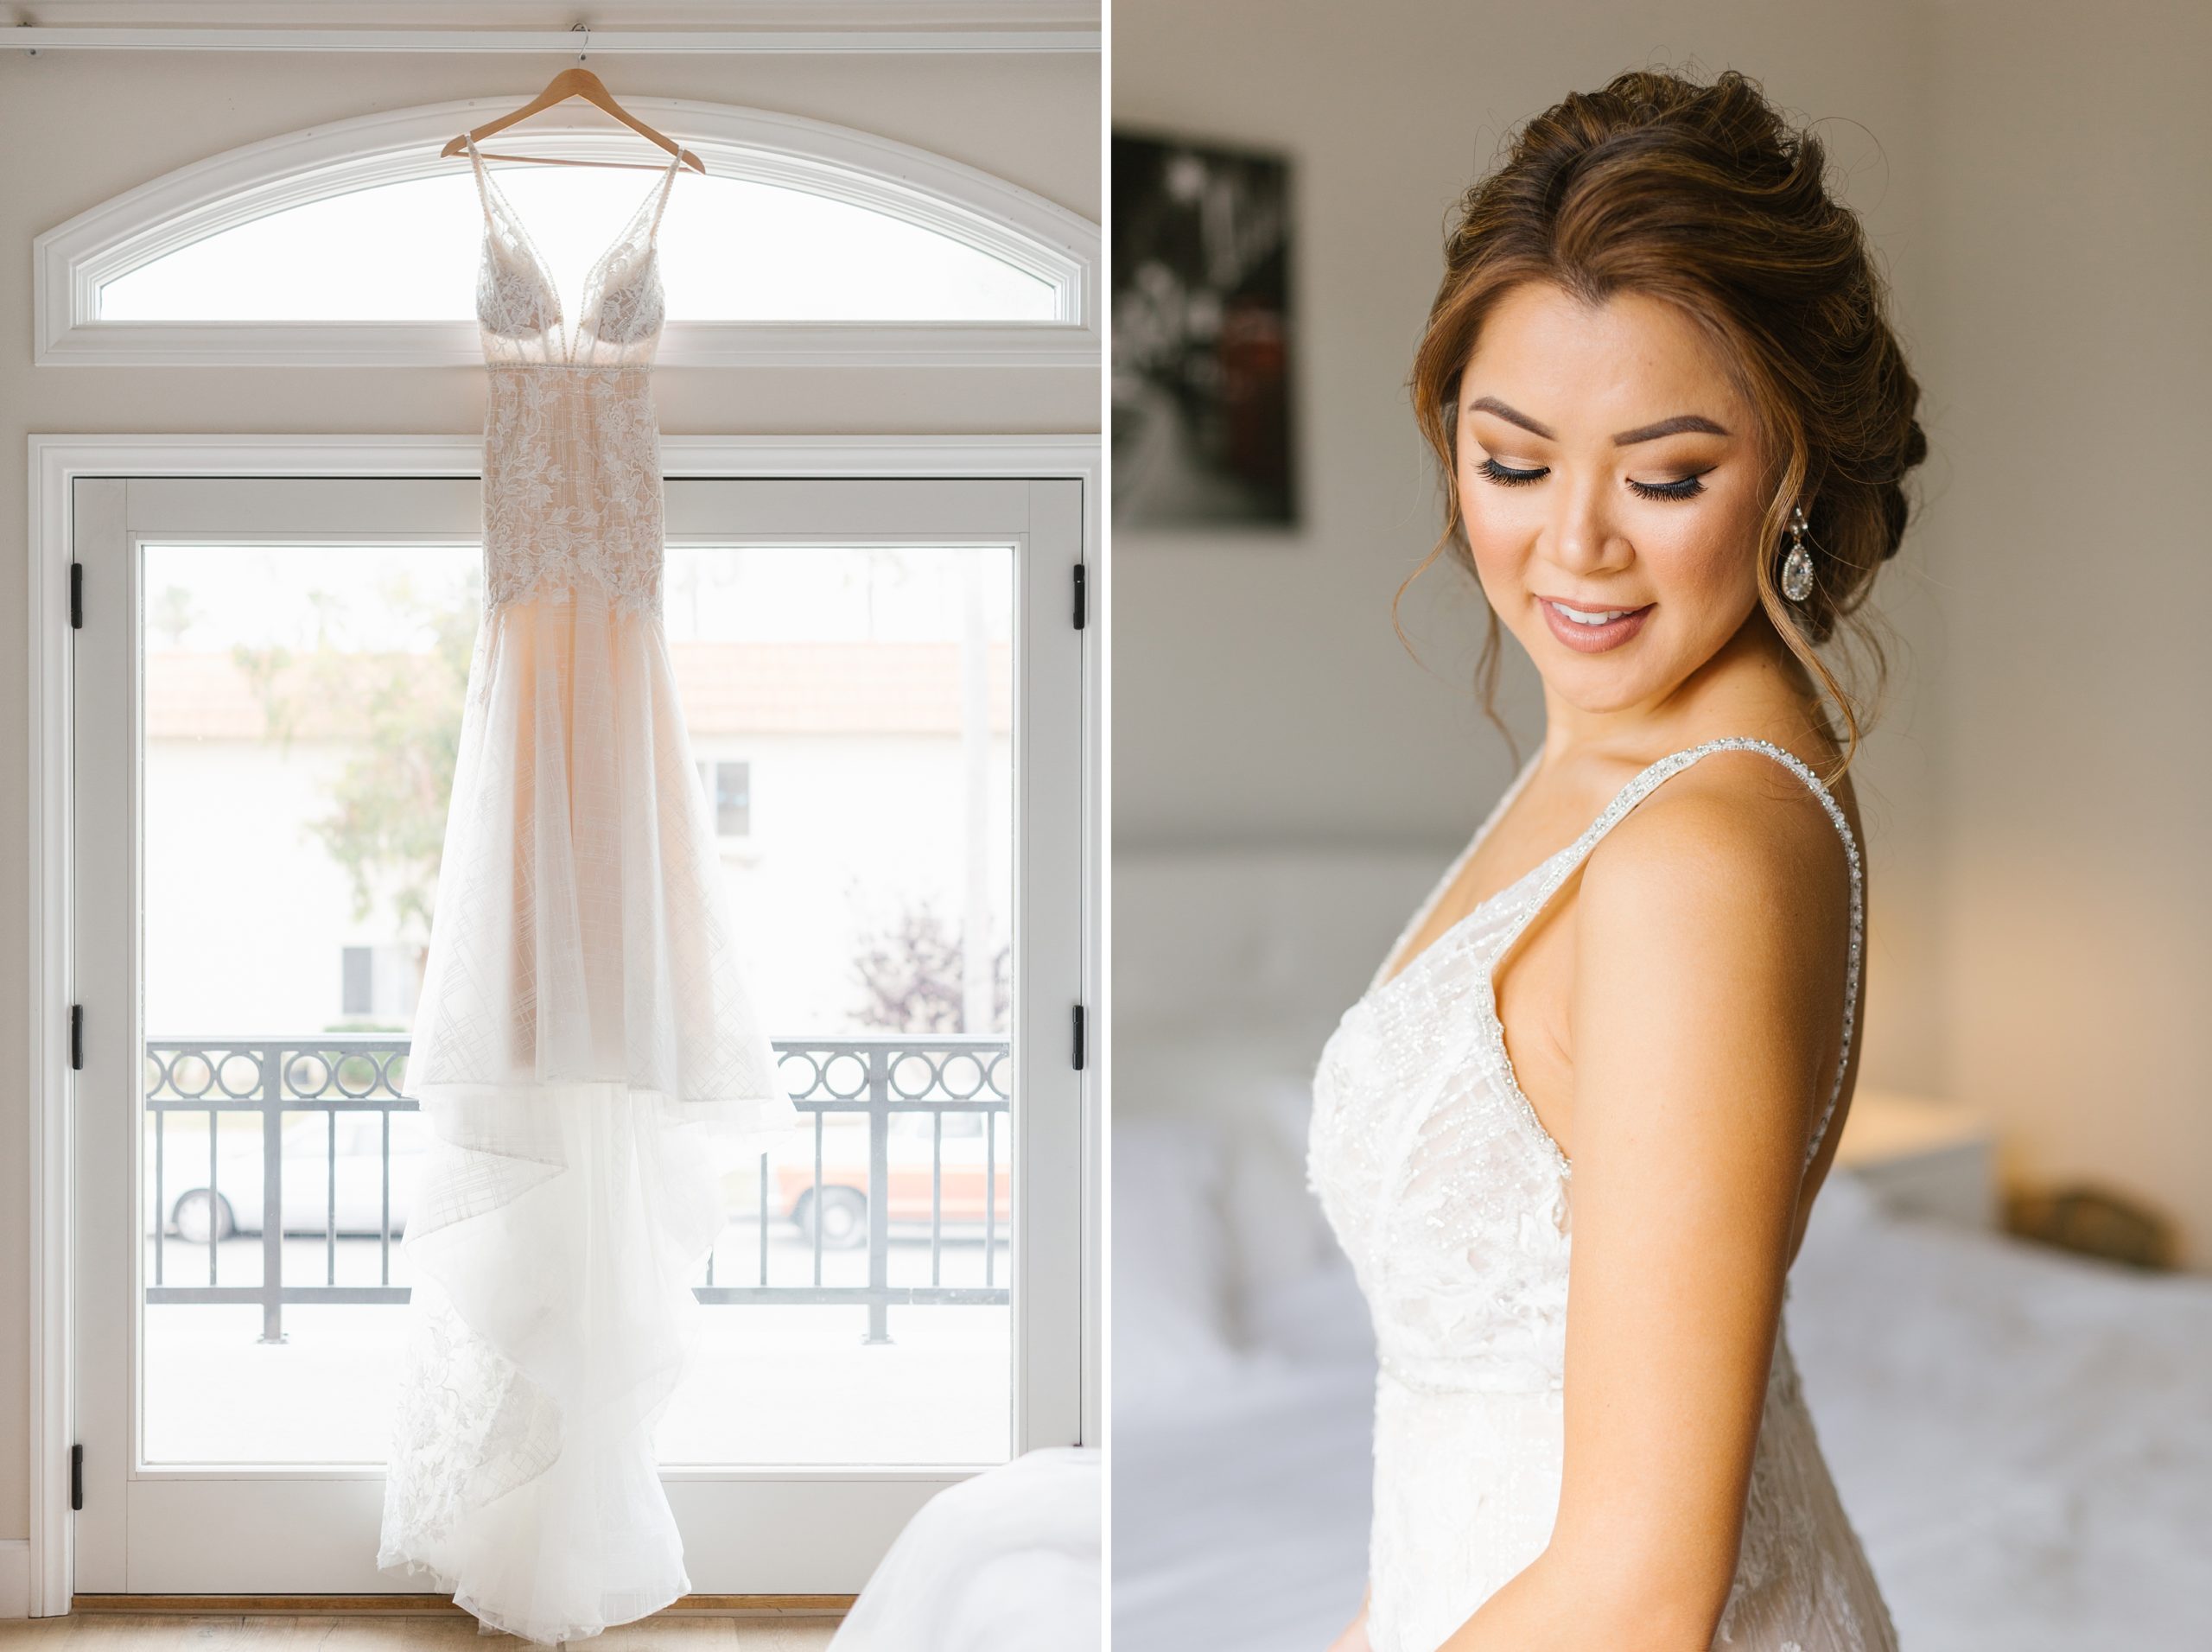 Calla Blanche wedding dress hangs in window before bride gets dressed